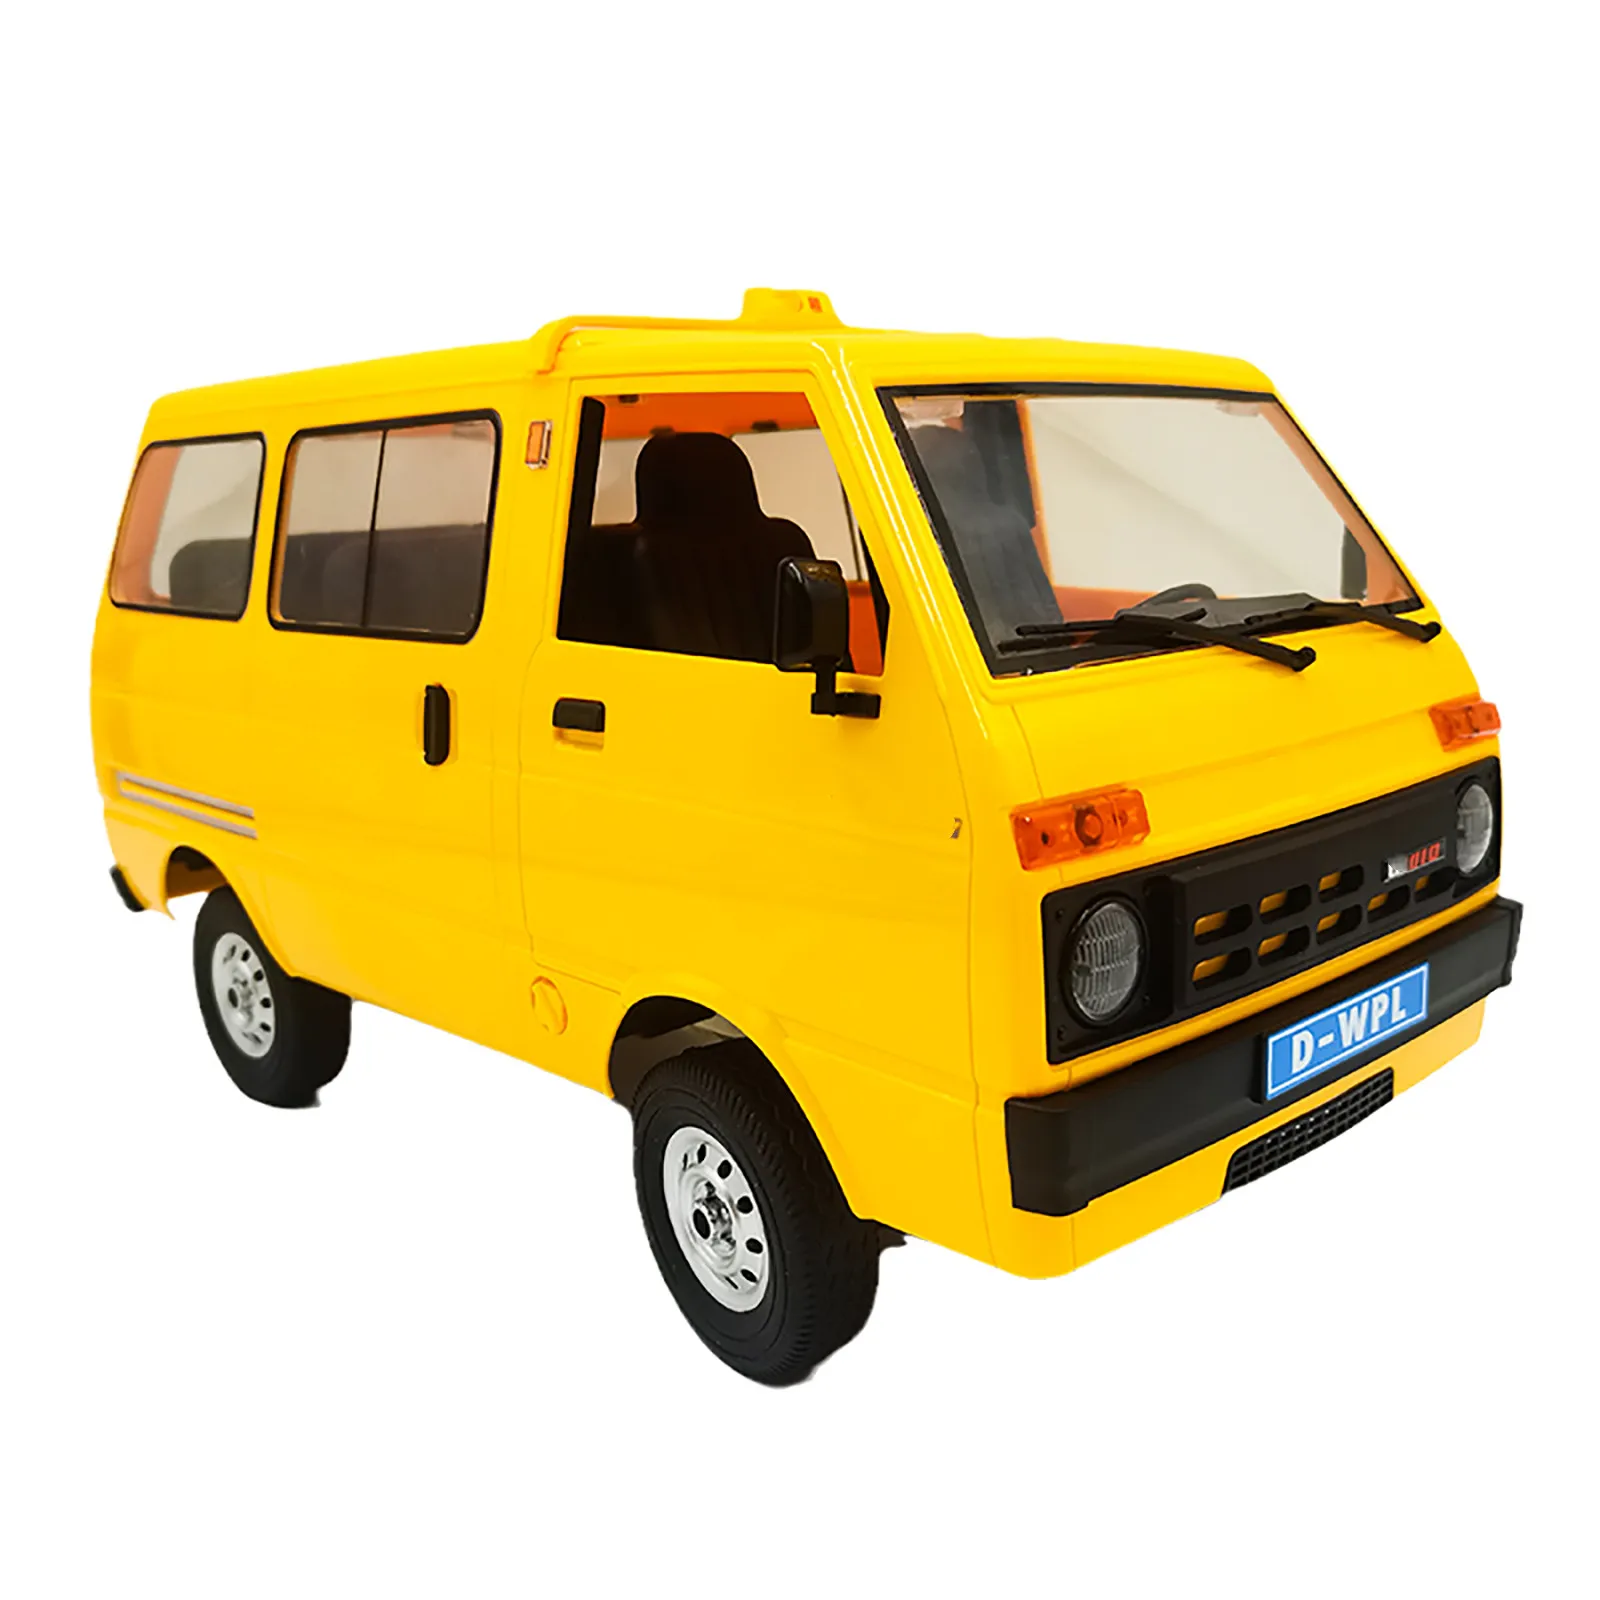 For WPL D42 1/10 RC Car 2.4G Simulation Drift Climbing Truck High Performance Motor Minivan Model Cars Toys For Boys Gifts enlarge